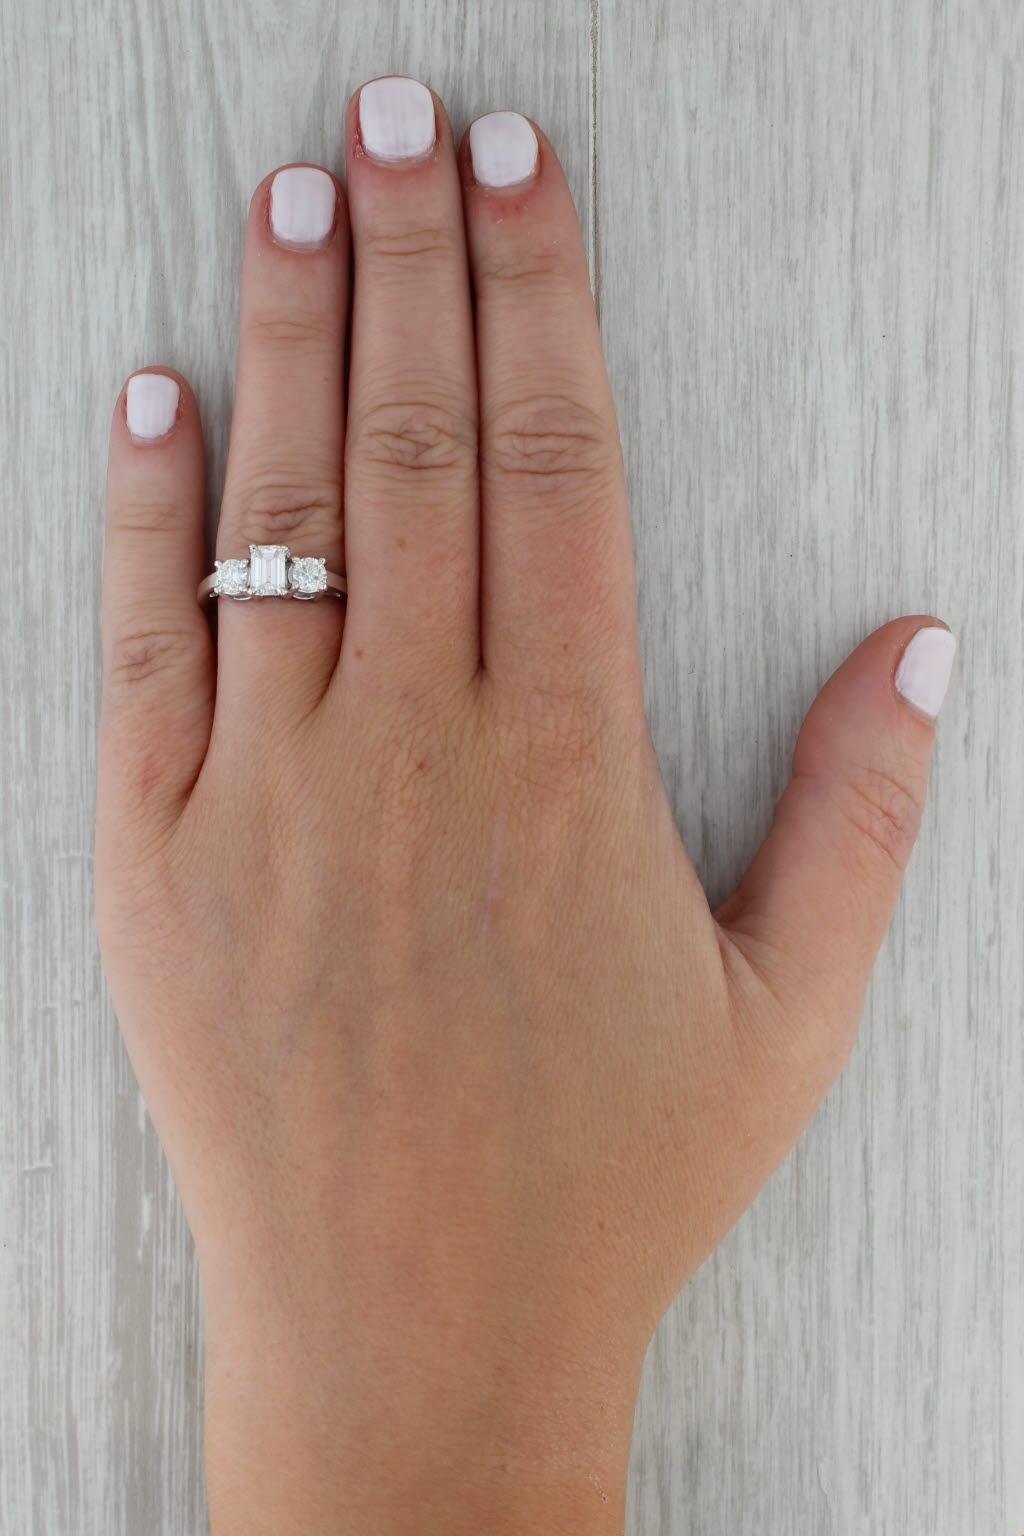 1.14ctw Emerald Cut Diamond Engagement Ring 14k White Gold 3-Stone Size 6.5 5